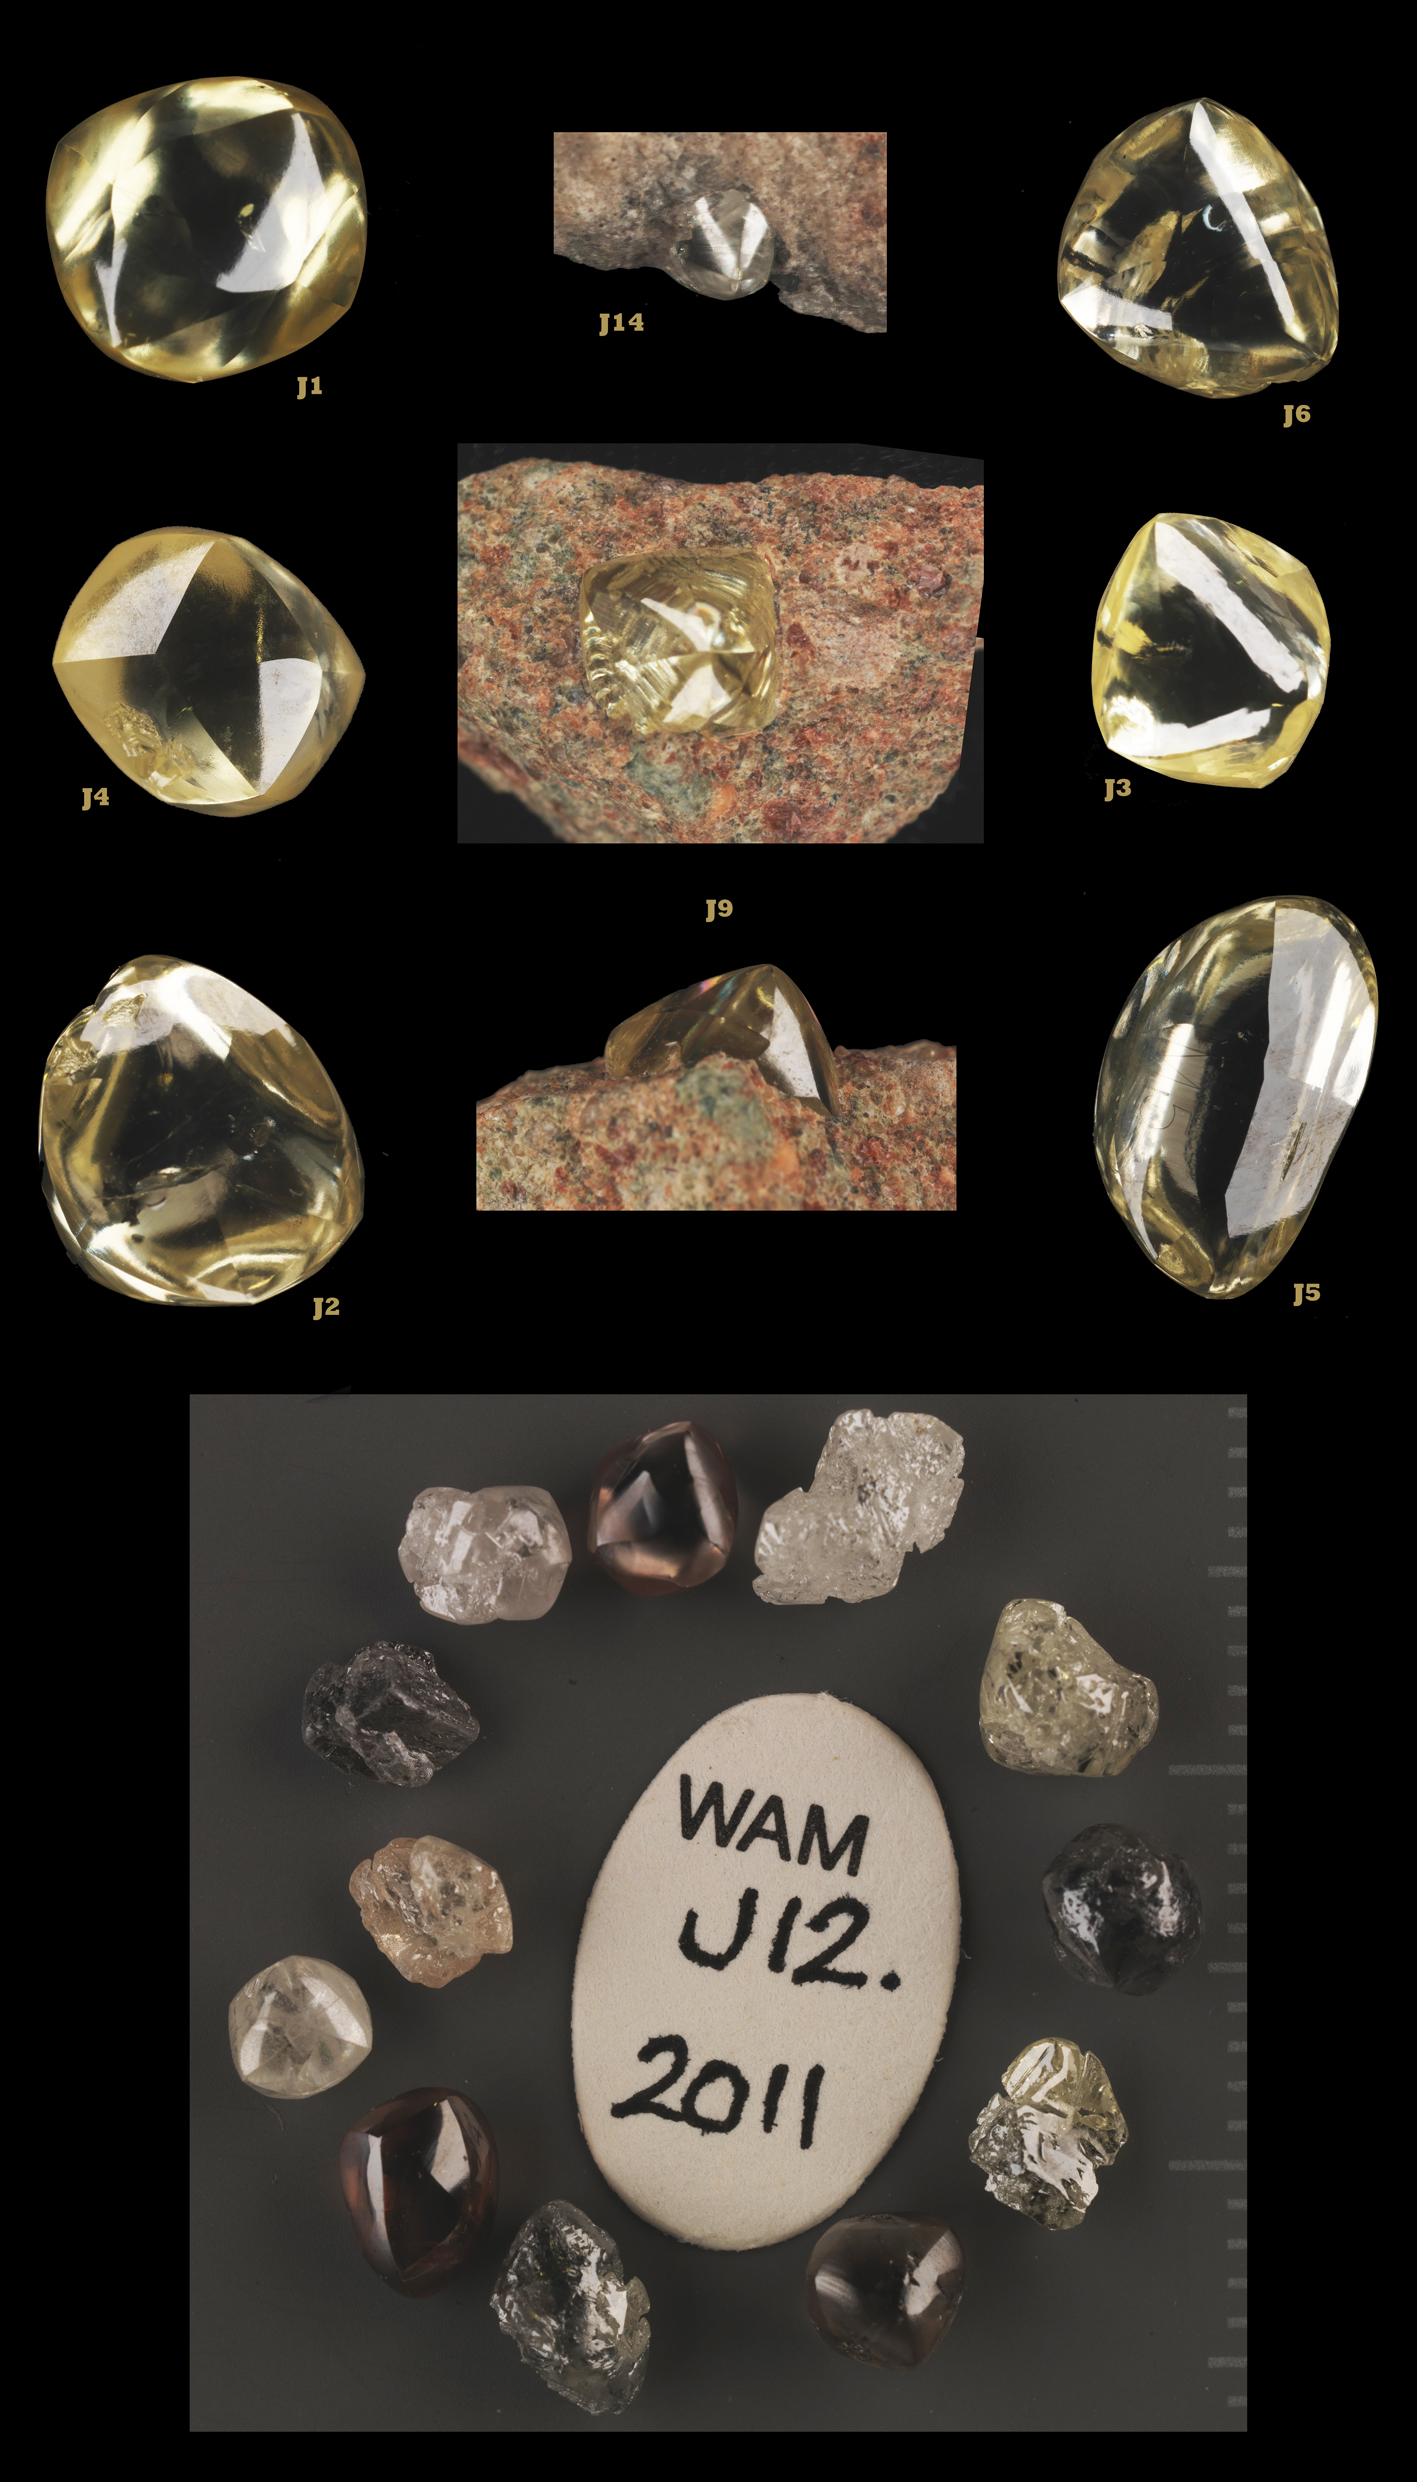 kimberley diamond strike definition ap world history